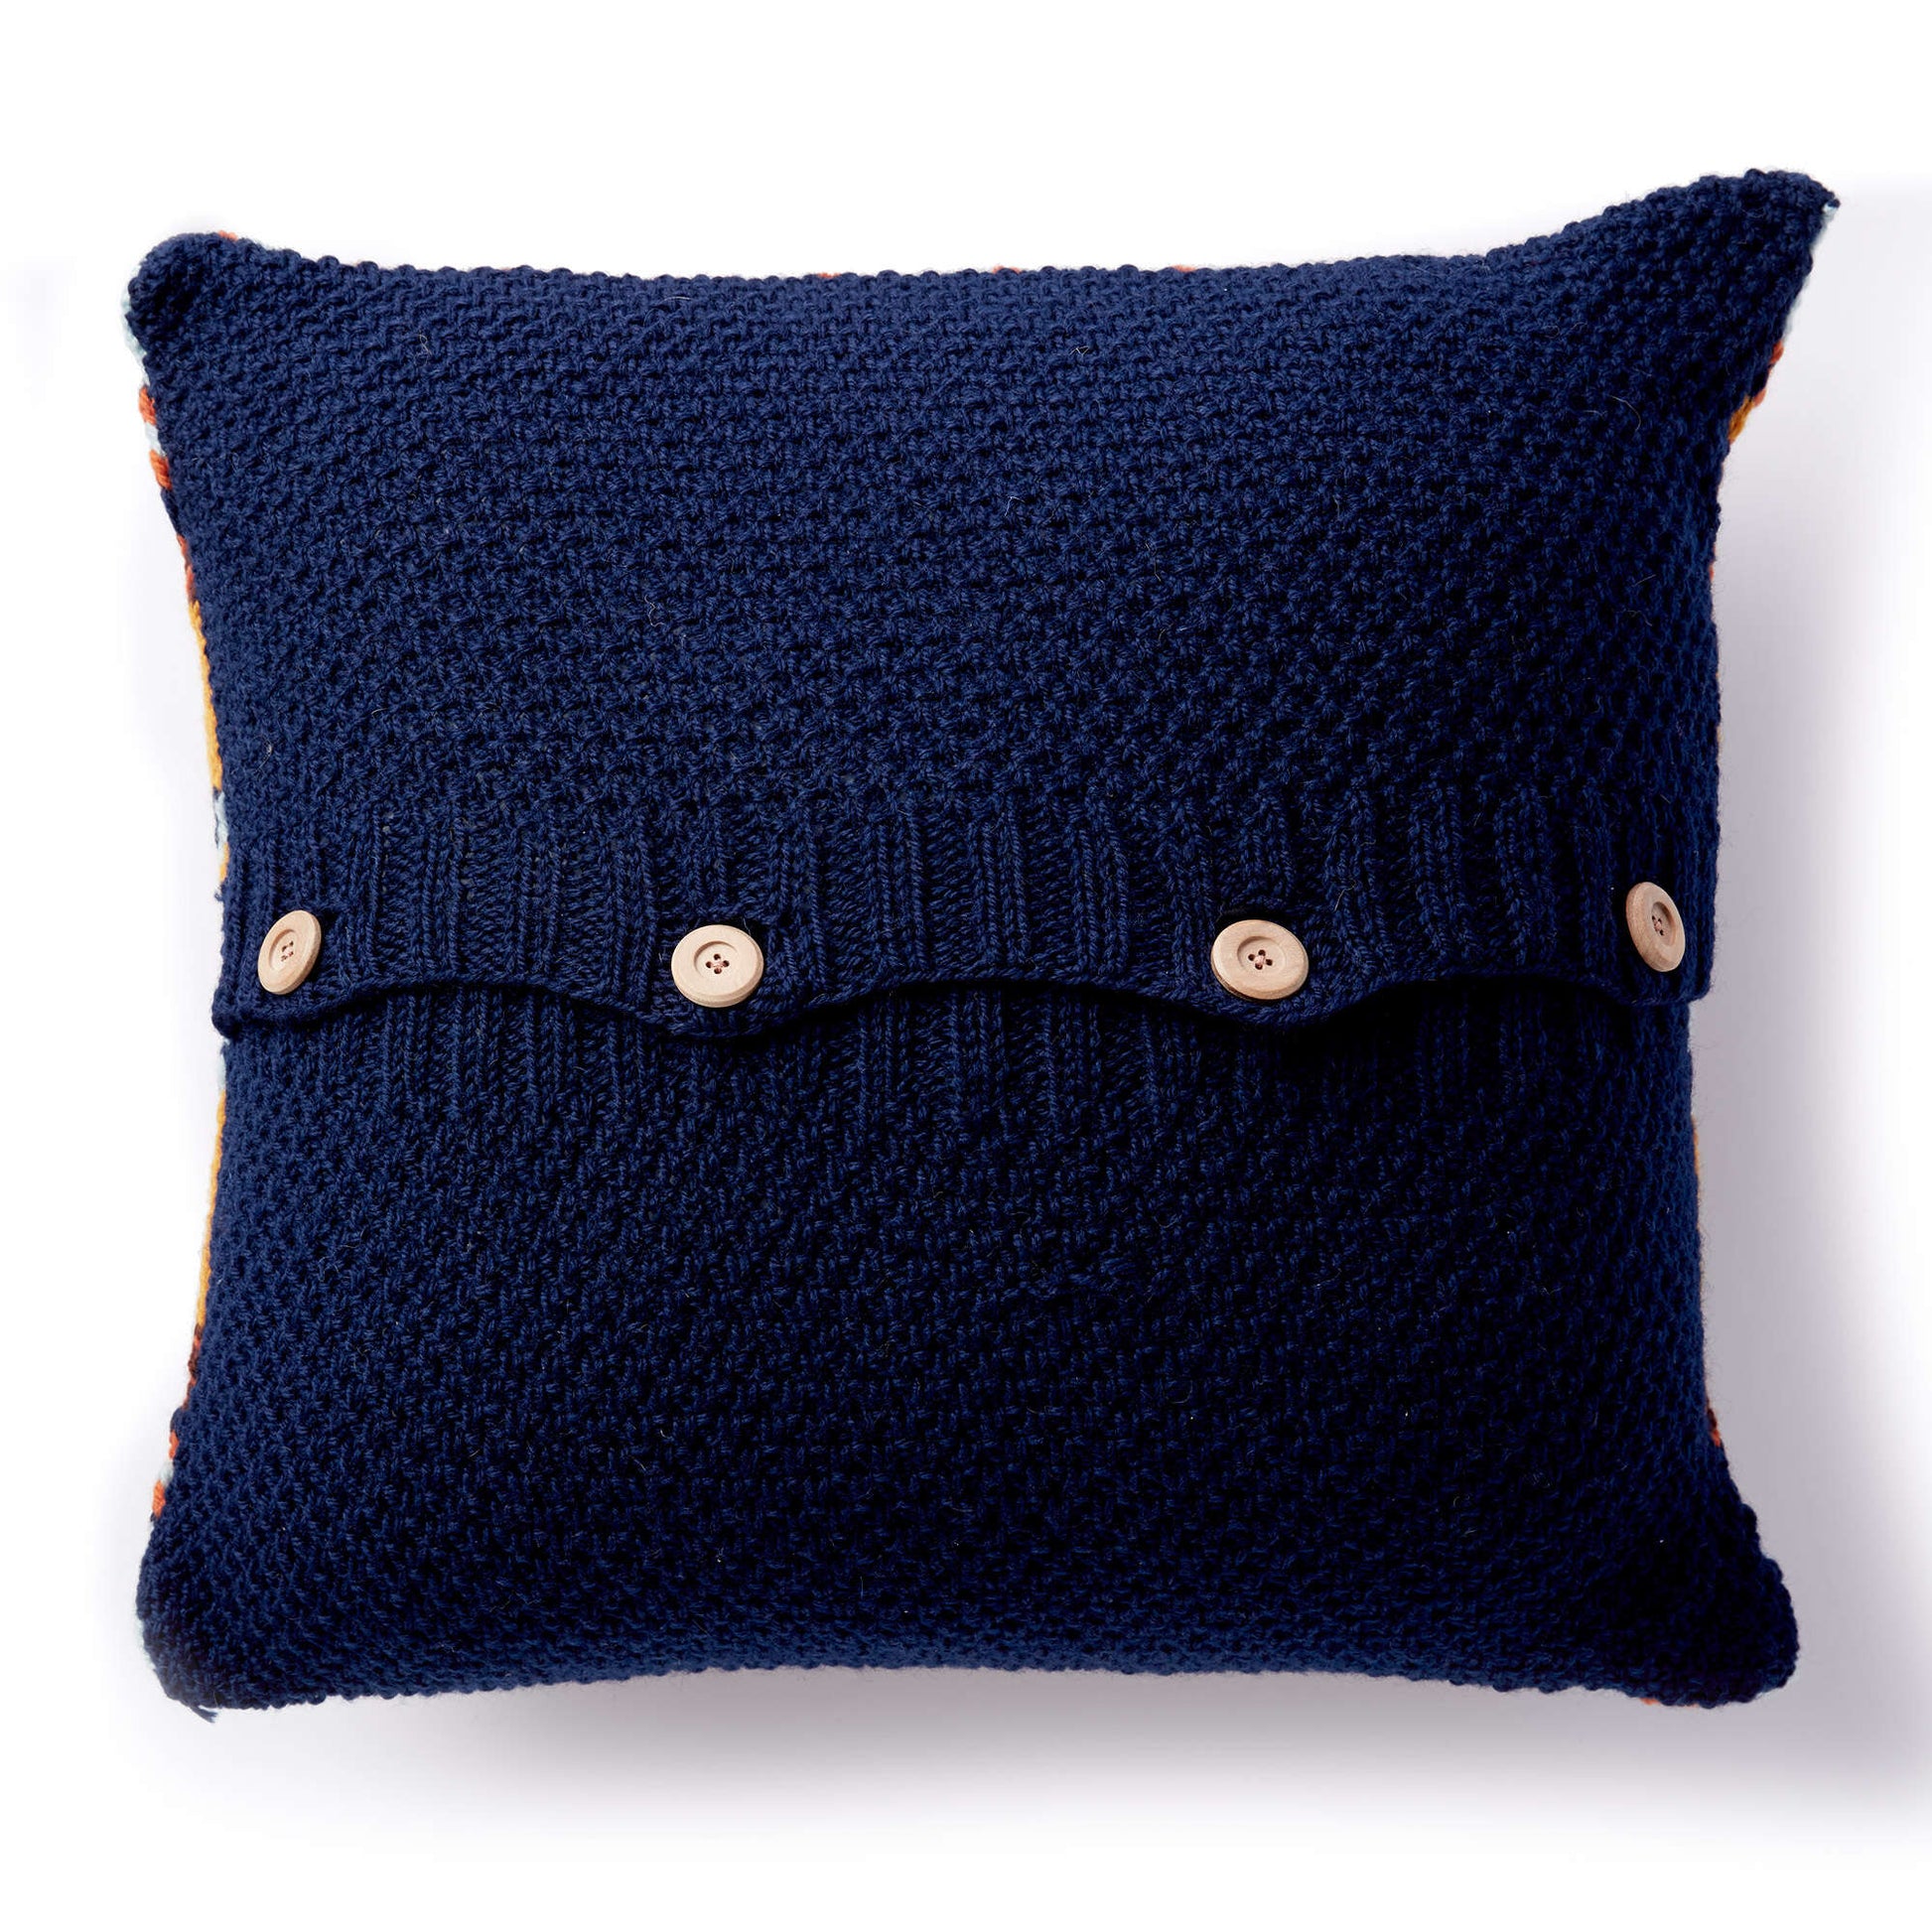 Free Patons Autumn Harvest Knit Pillow Pattern